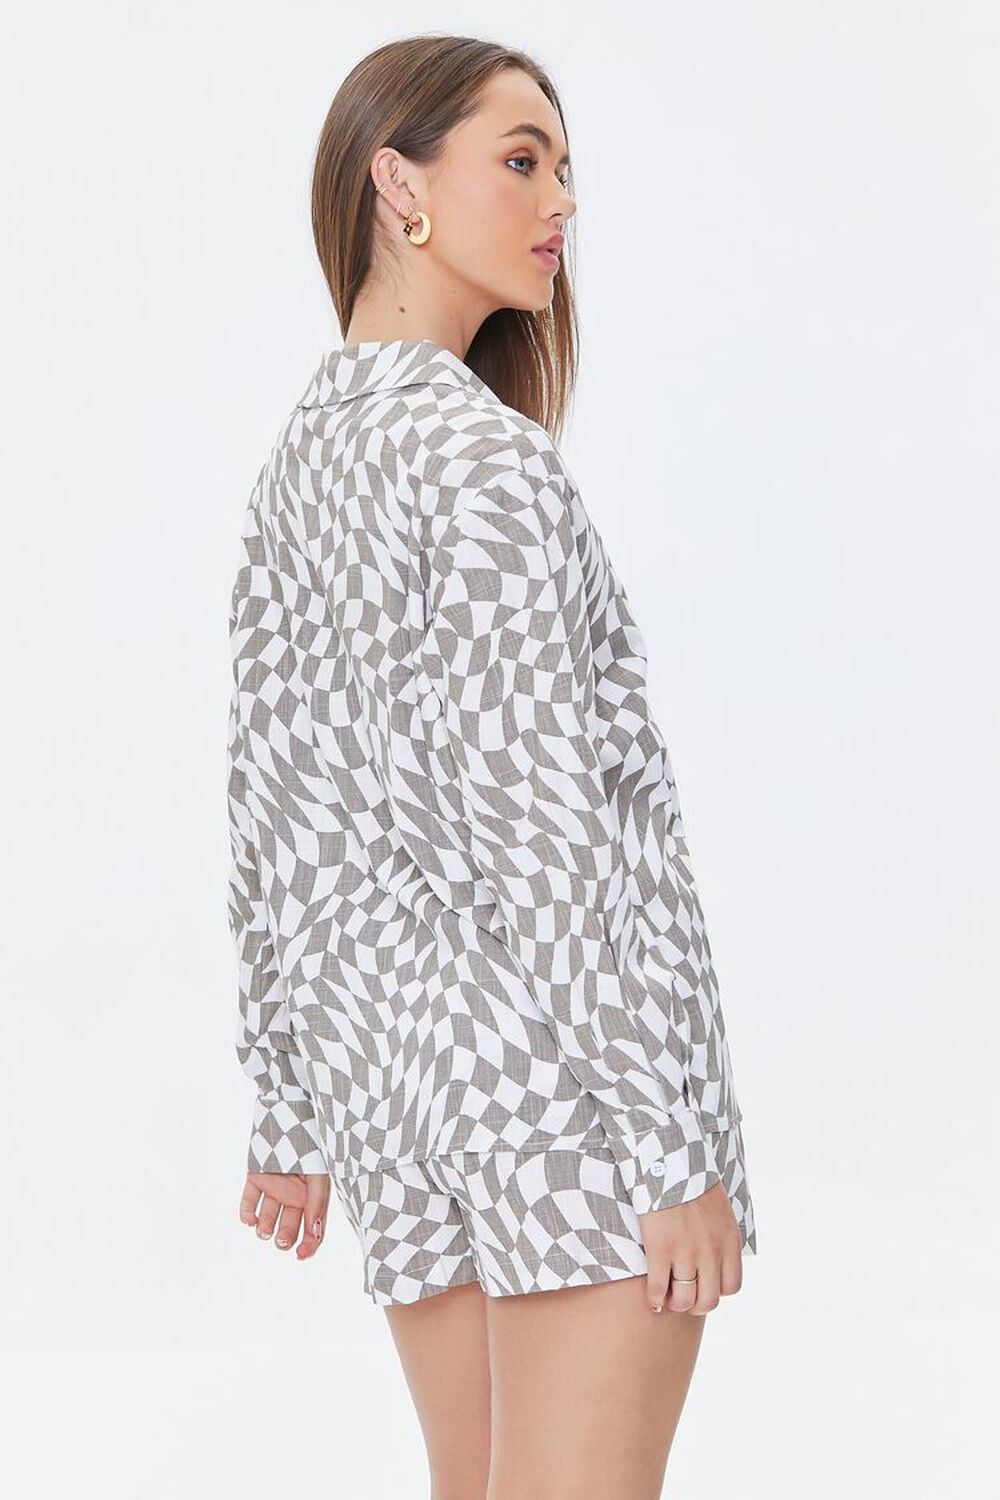 TAUPE/MULTI Checkered Print Shirt & Shorts Set, image 3